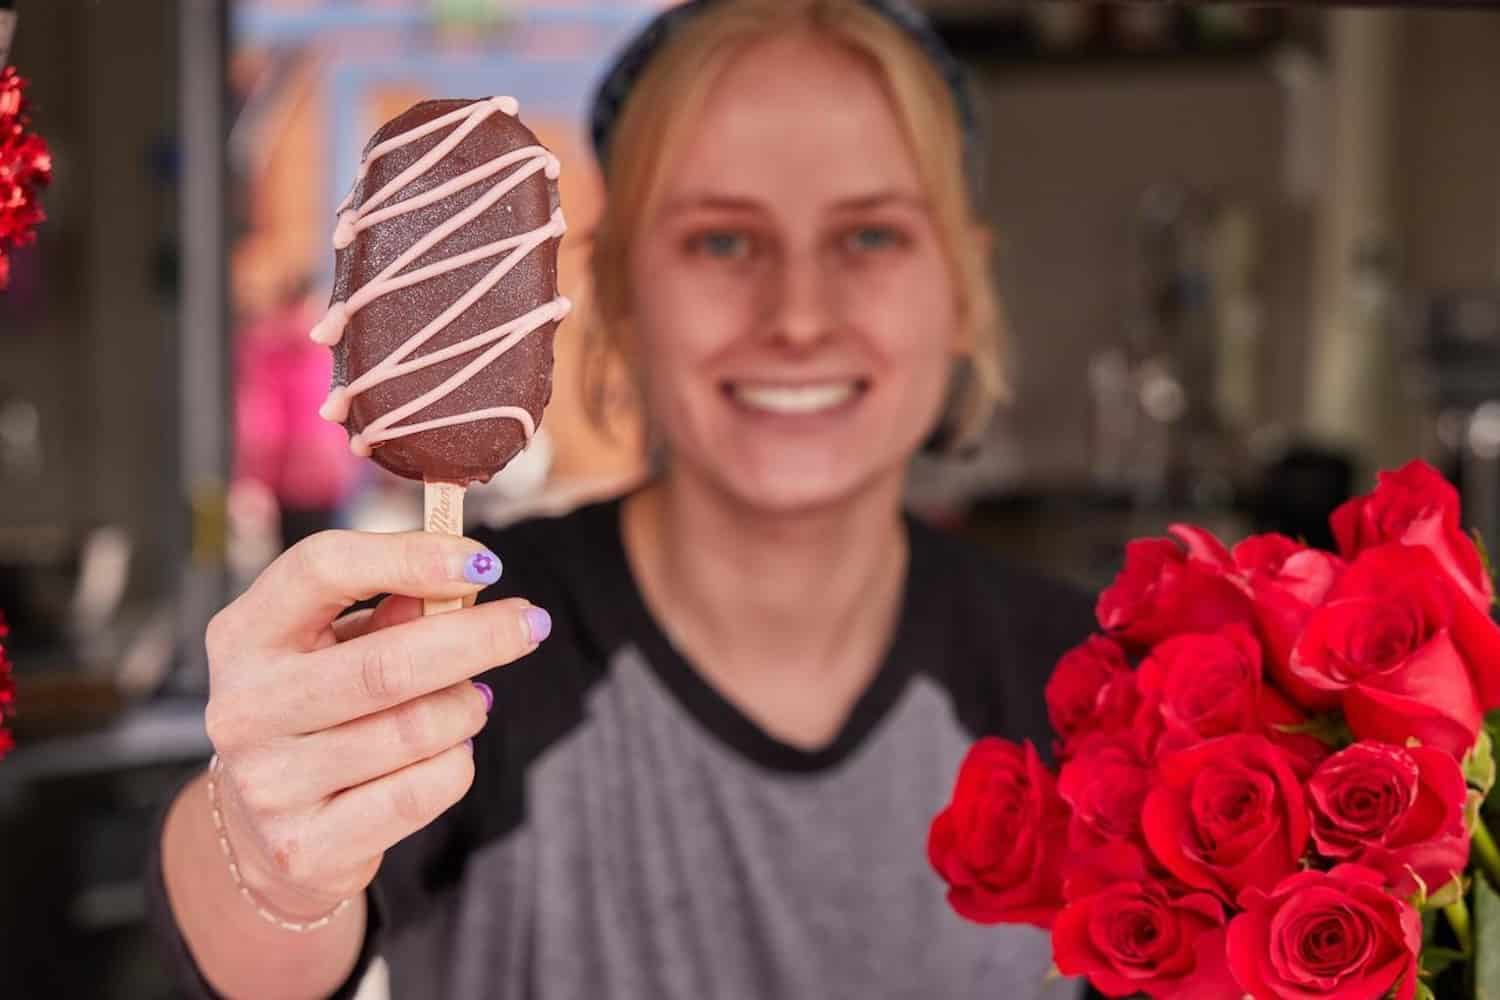 ice cream bar and roses